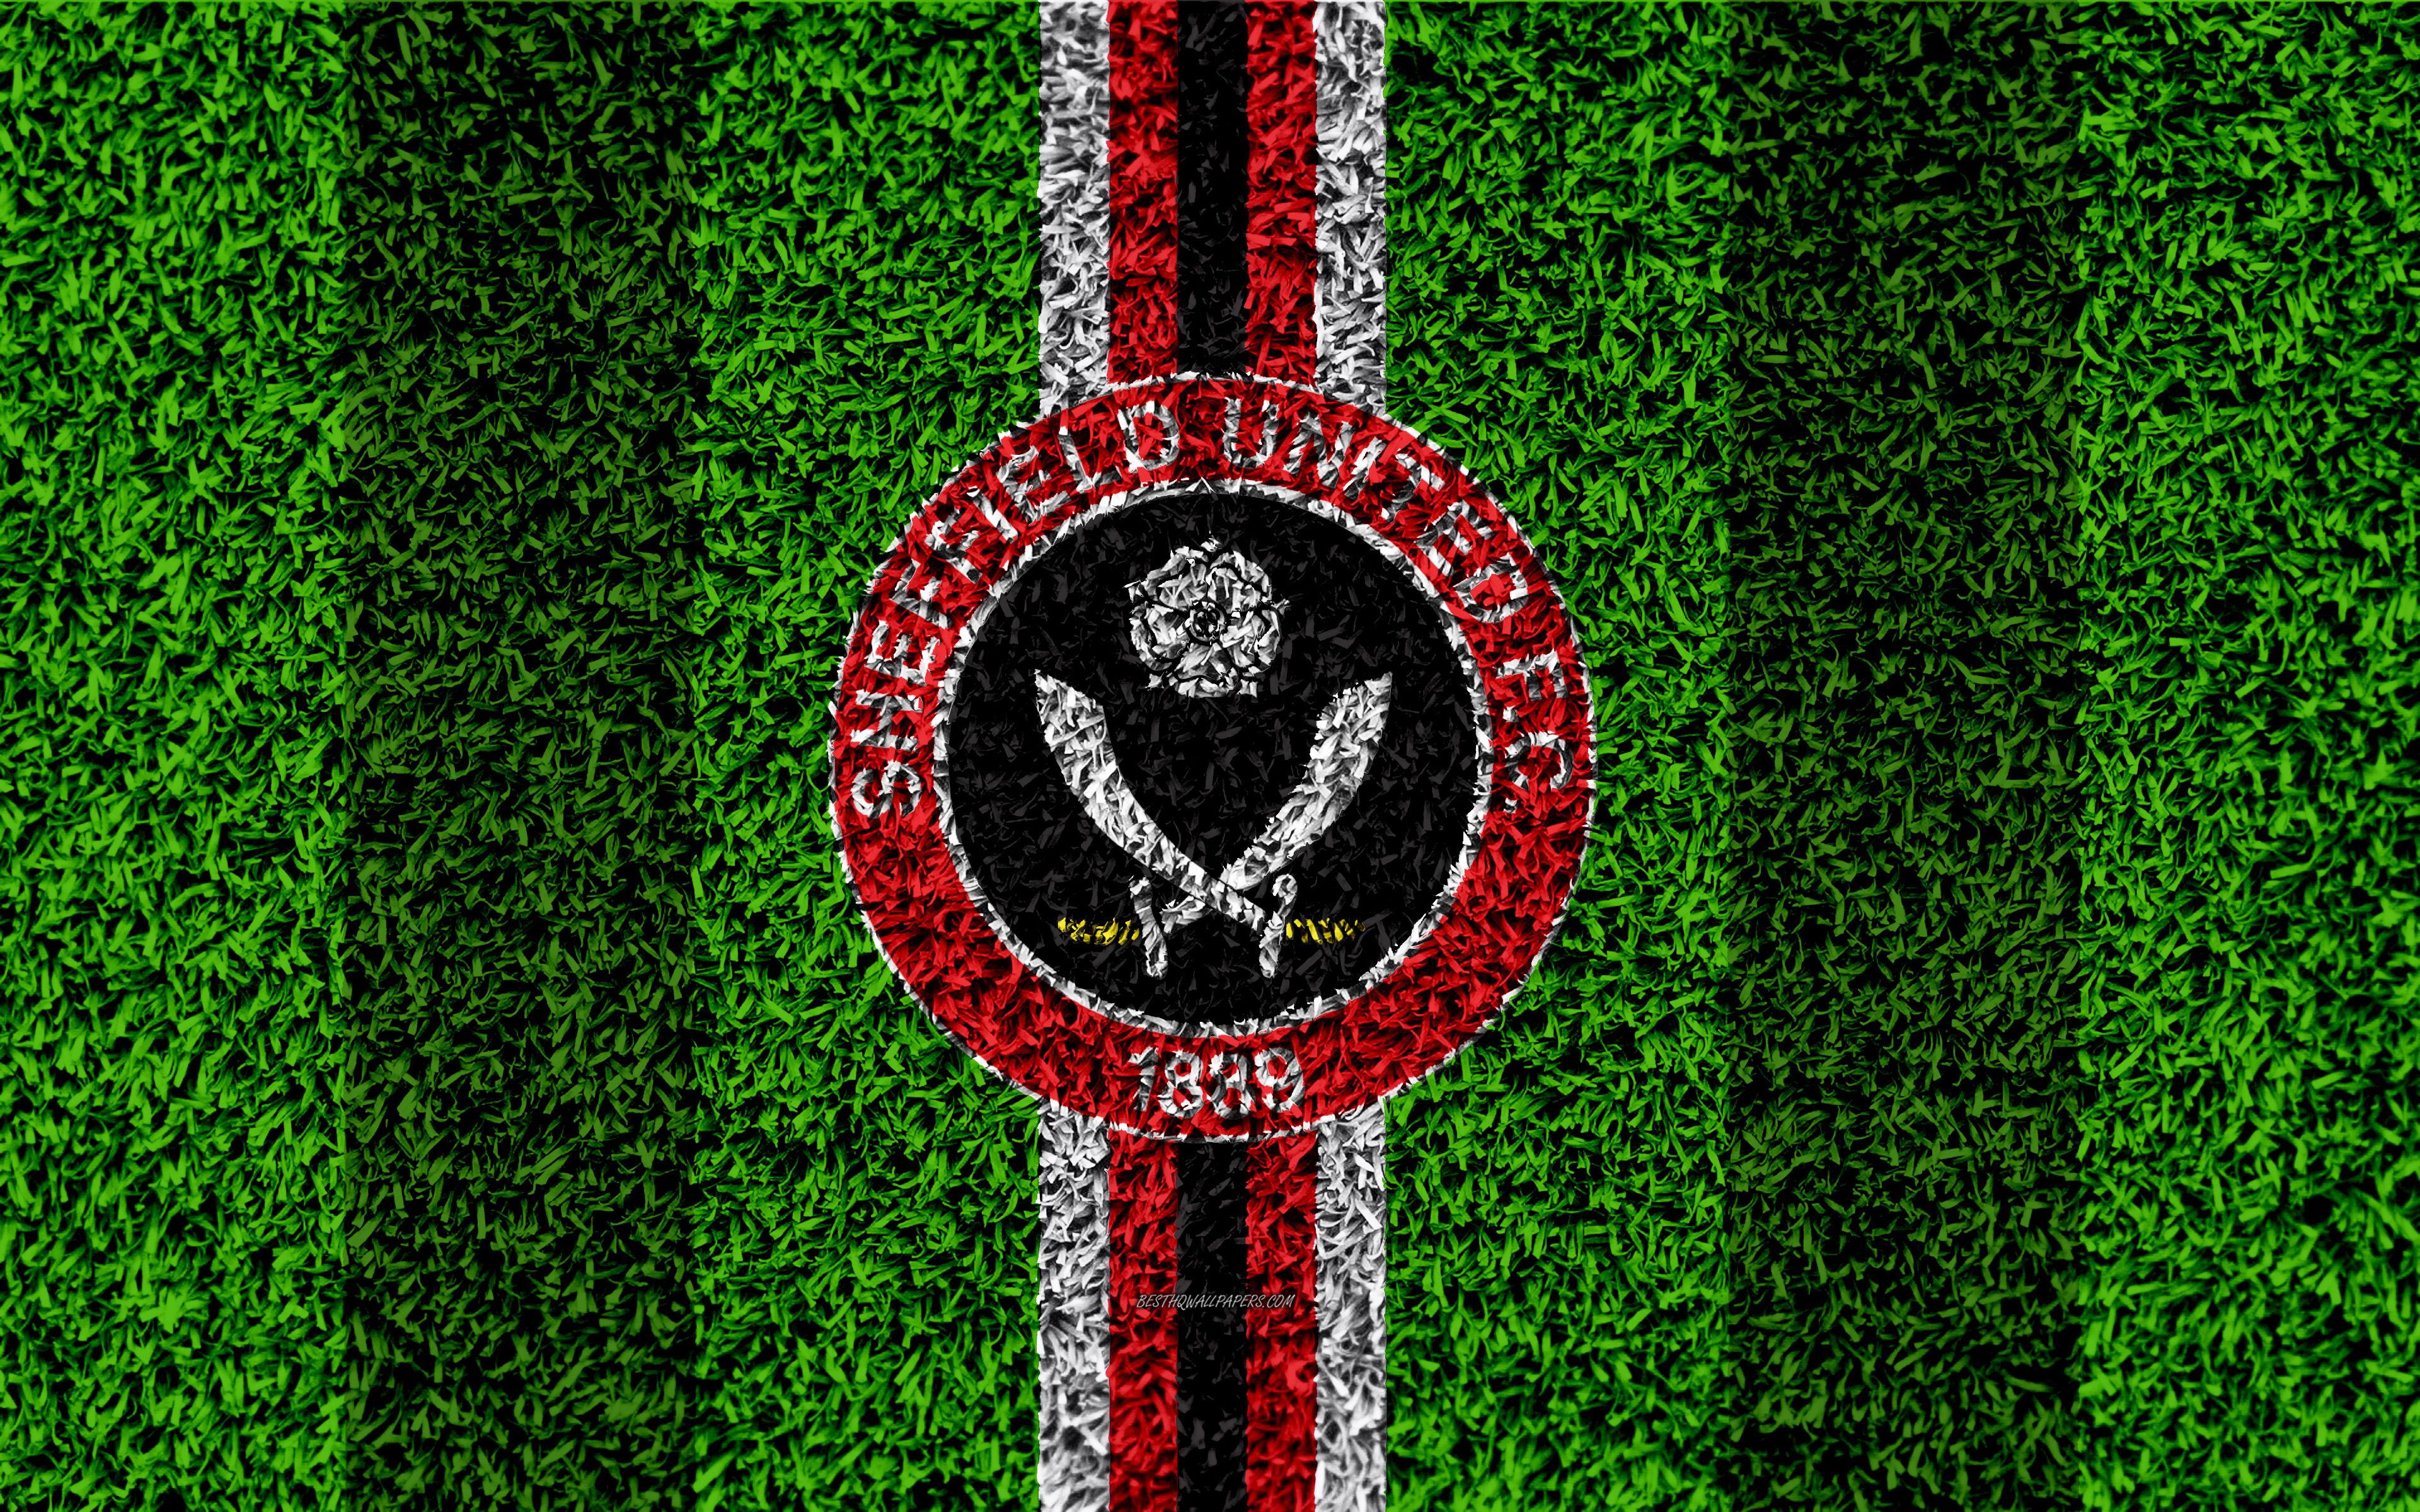 Download wallpaper Sheffield United FC, 4k, football lawn, logo